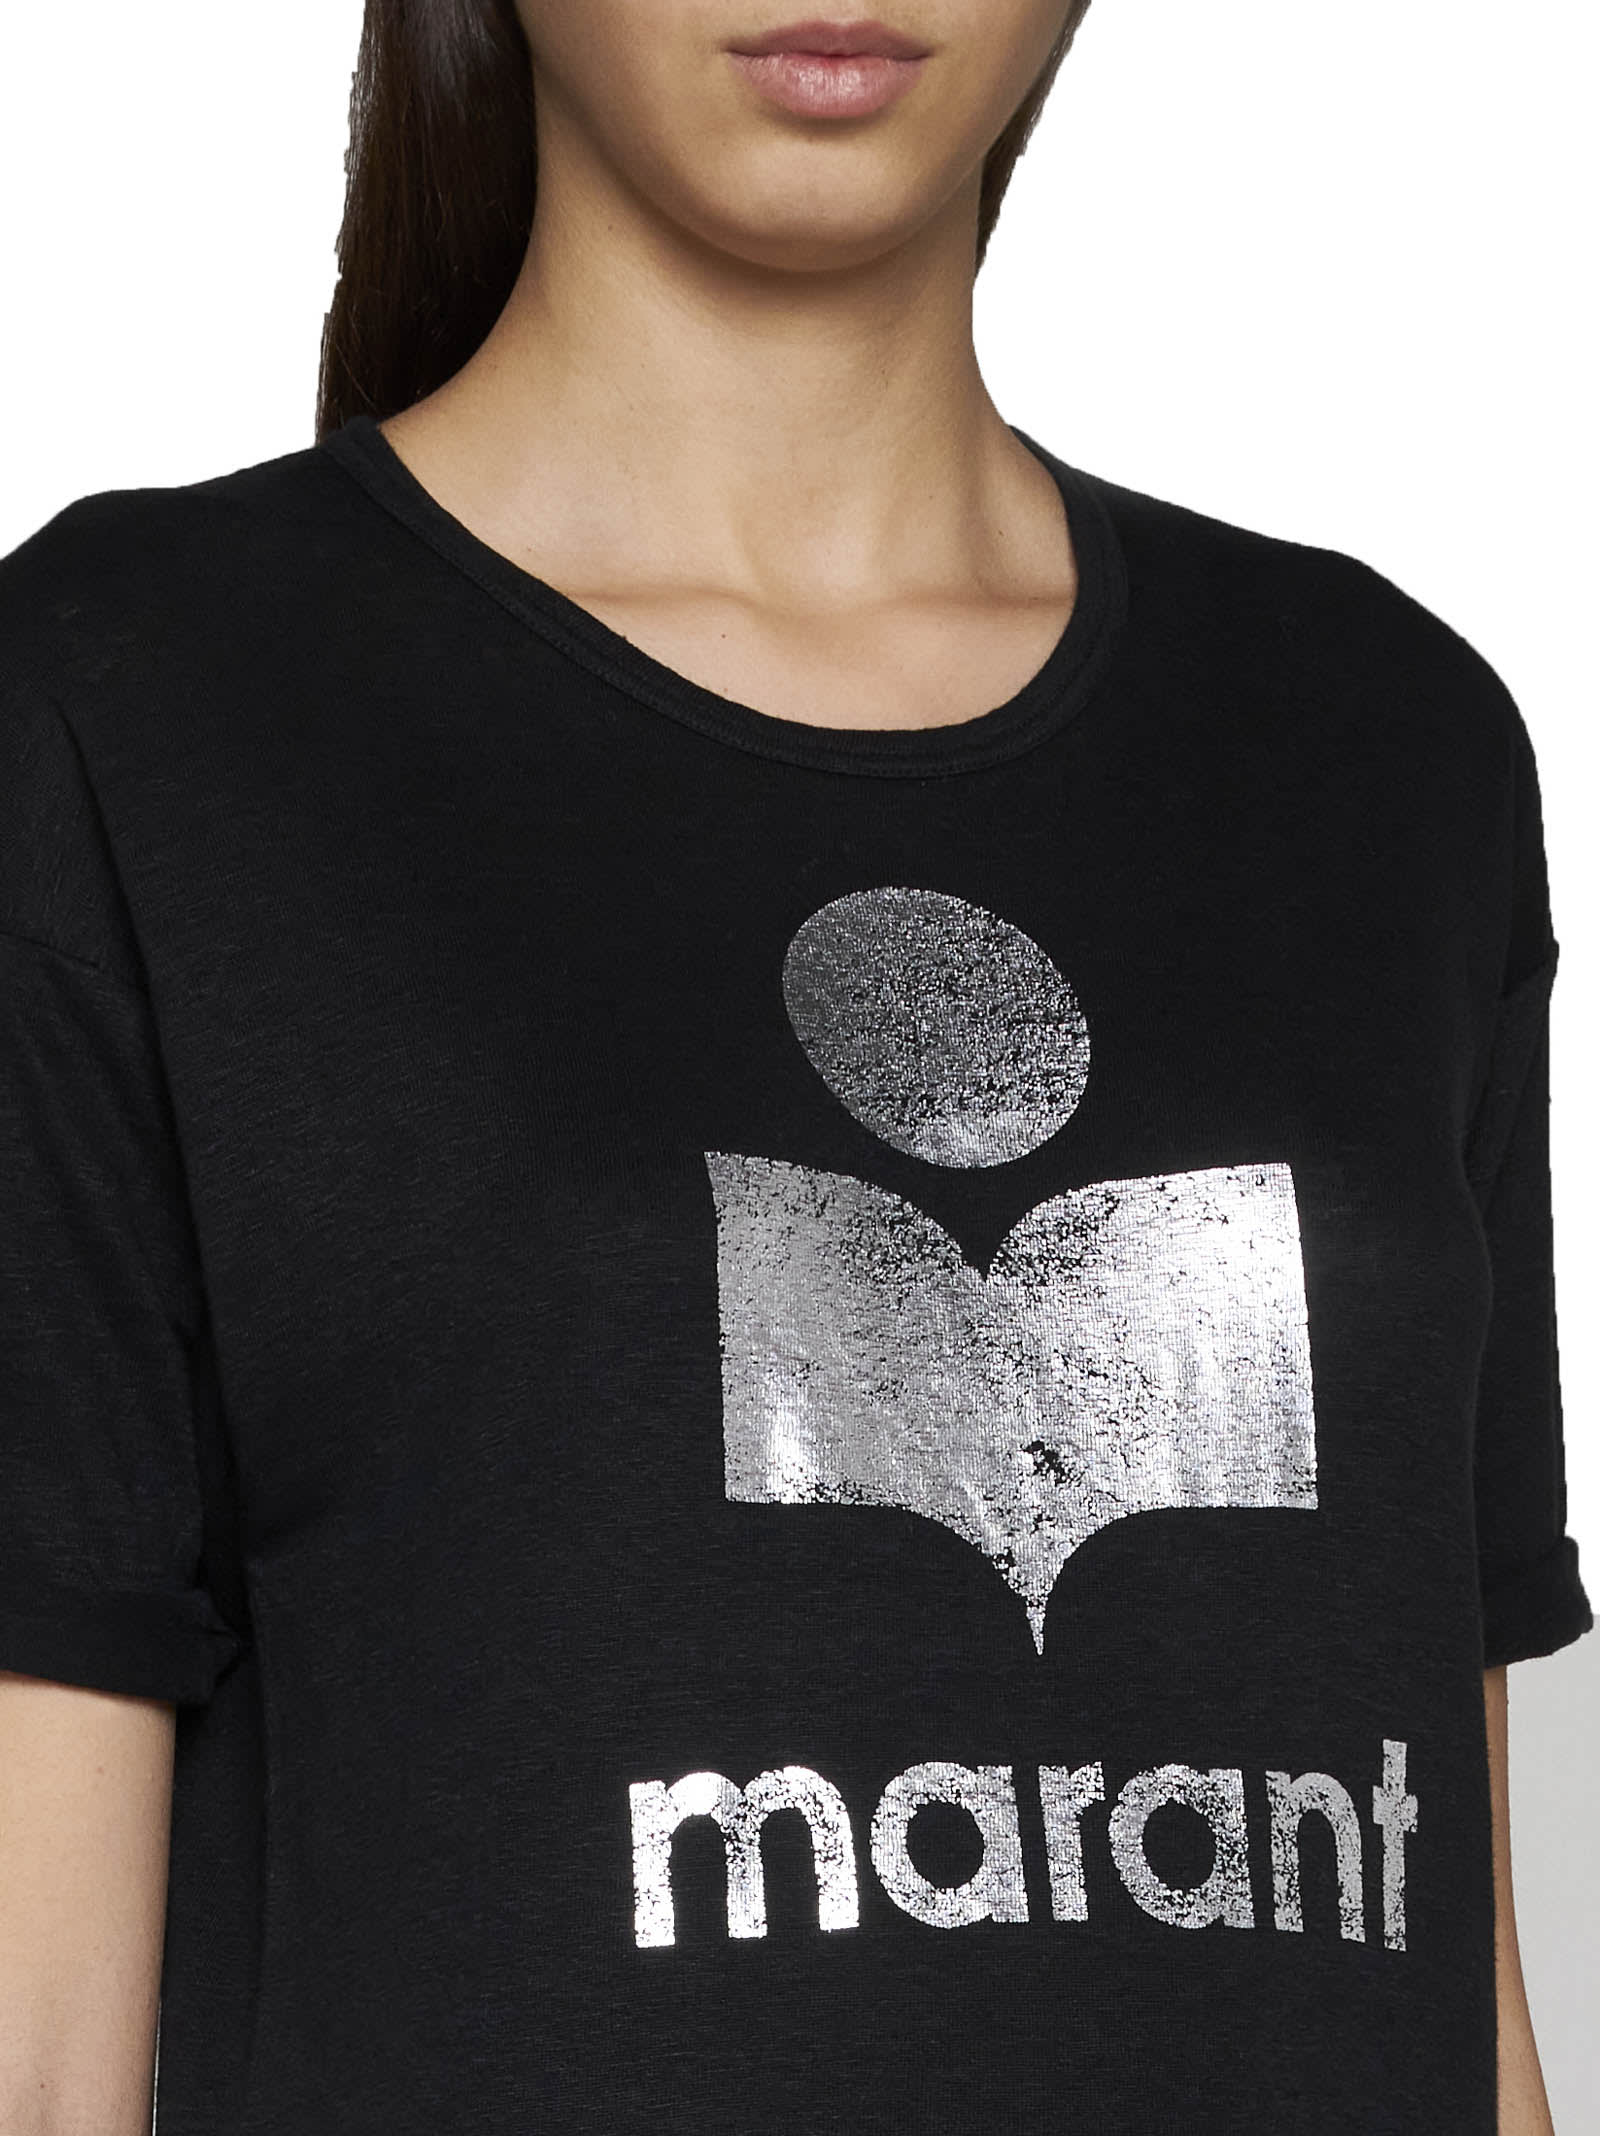 Shop Marant Etoile T-shirt In Black